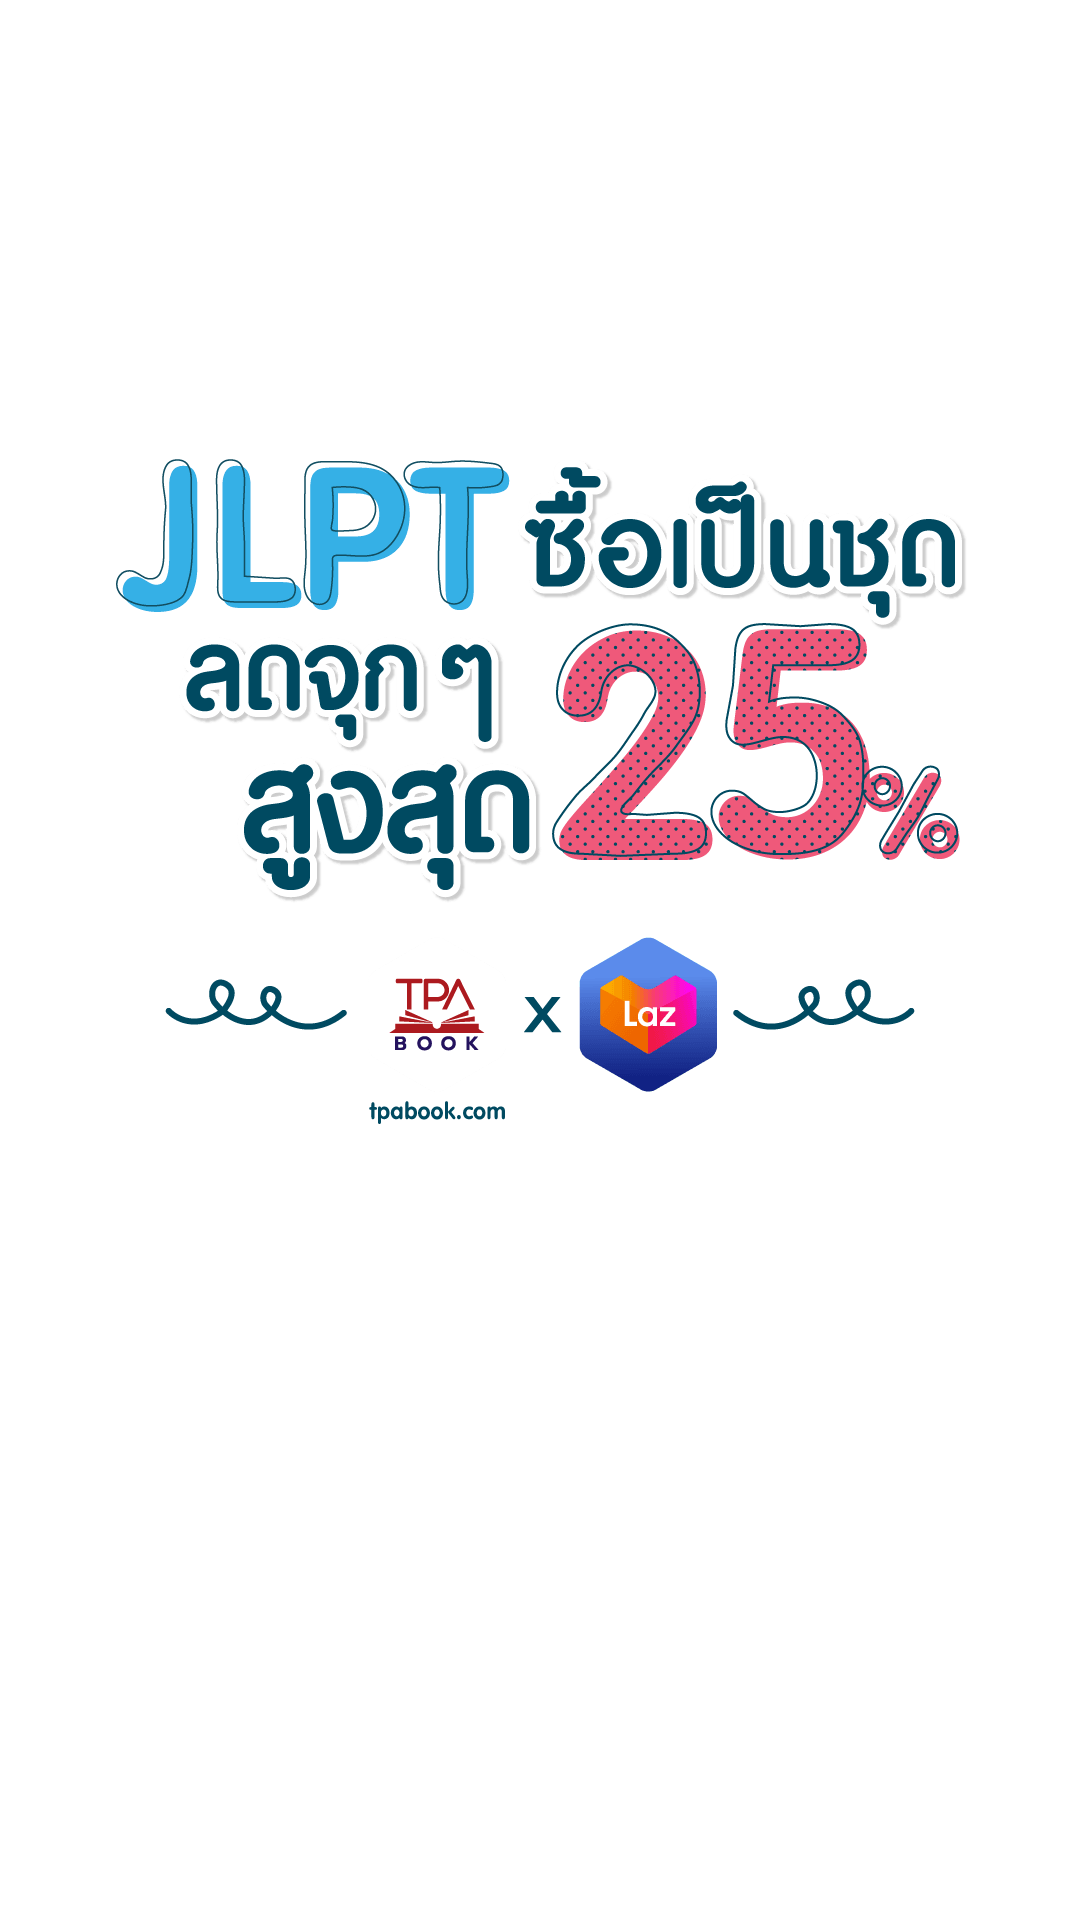 JLPT Clearance Sale - MB